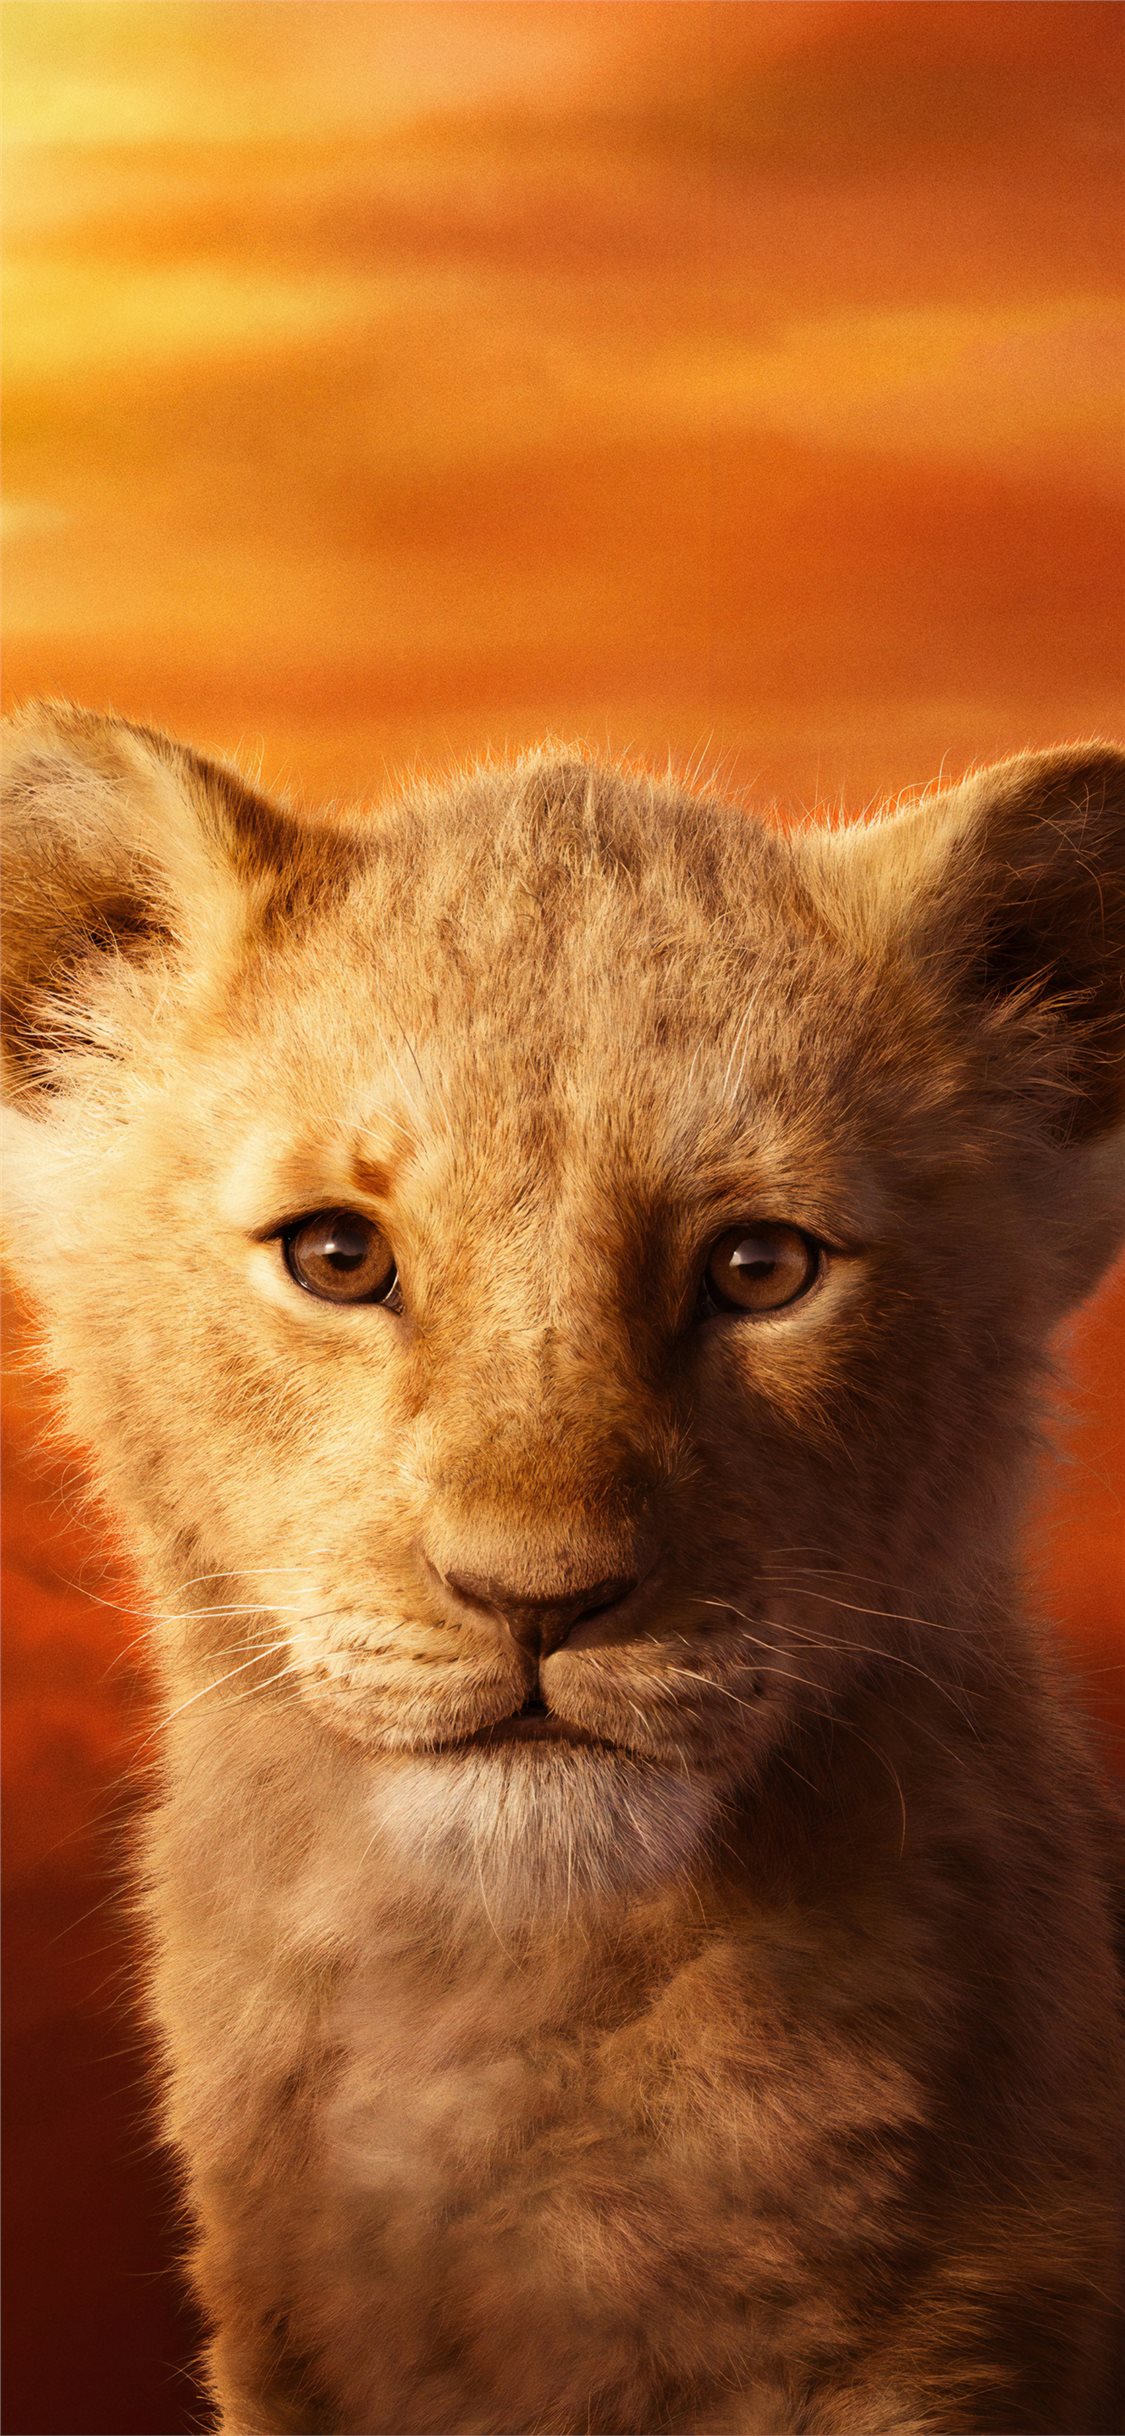 Lion King 2019 Wallpaper Iphone - HD Wallpaper 